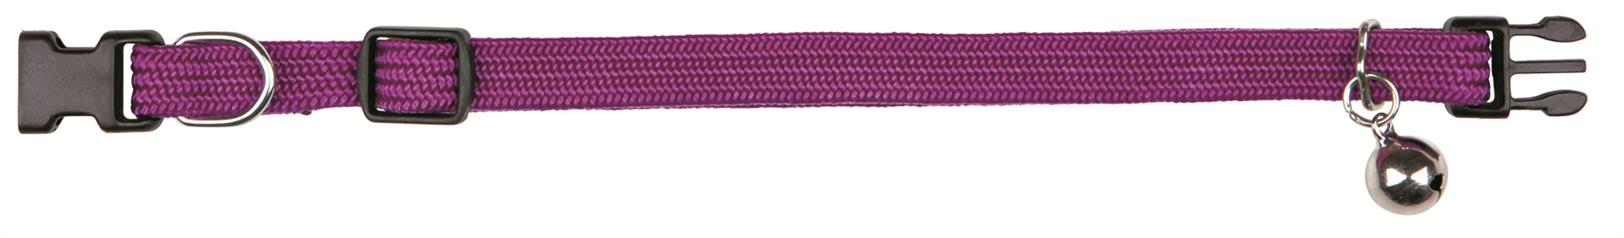 Trixie Nylon Katzenhalsband, elastisch, diverse Farben